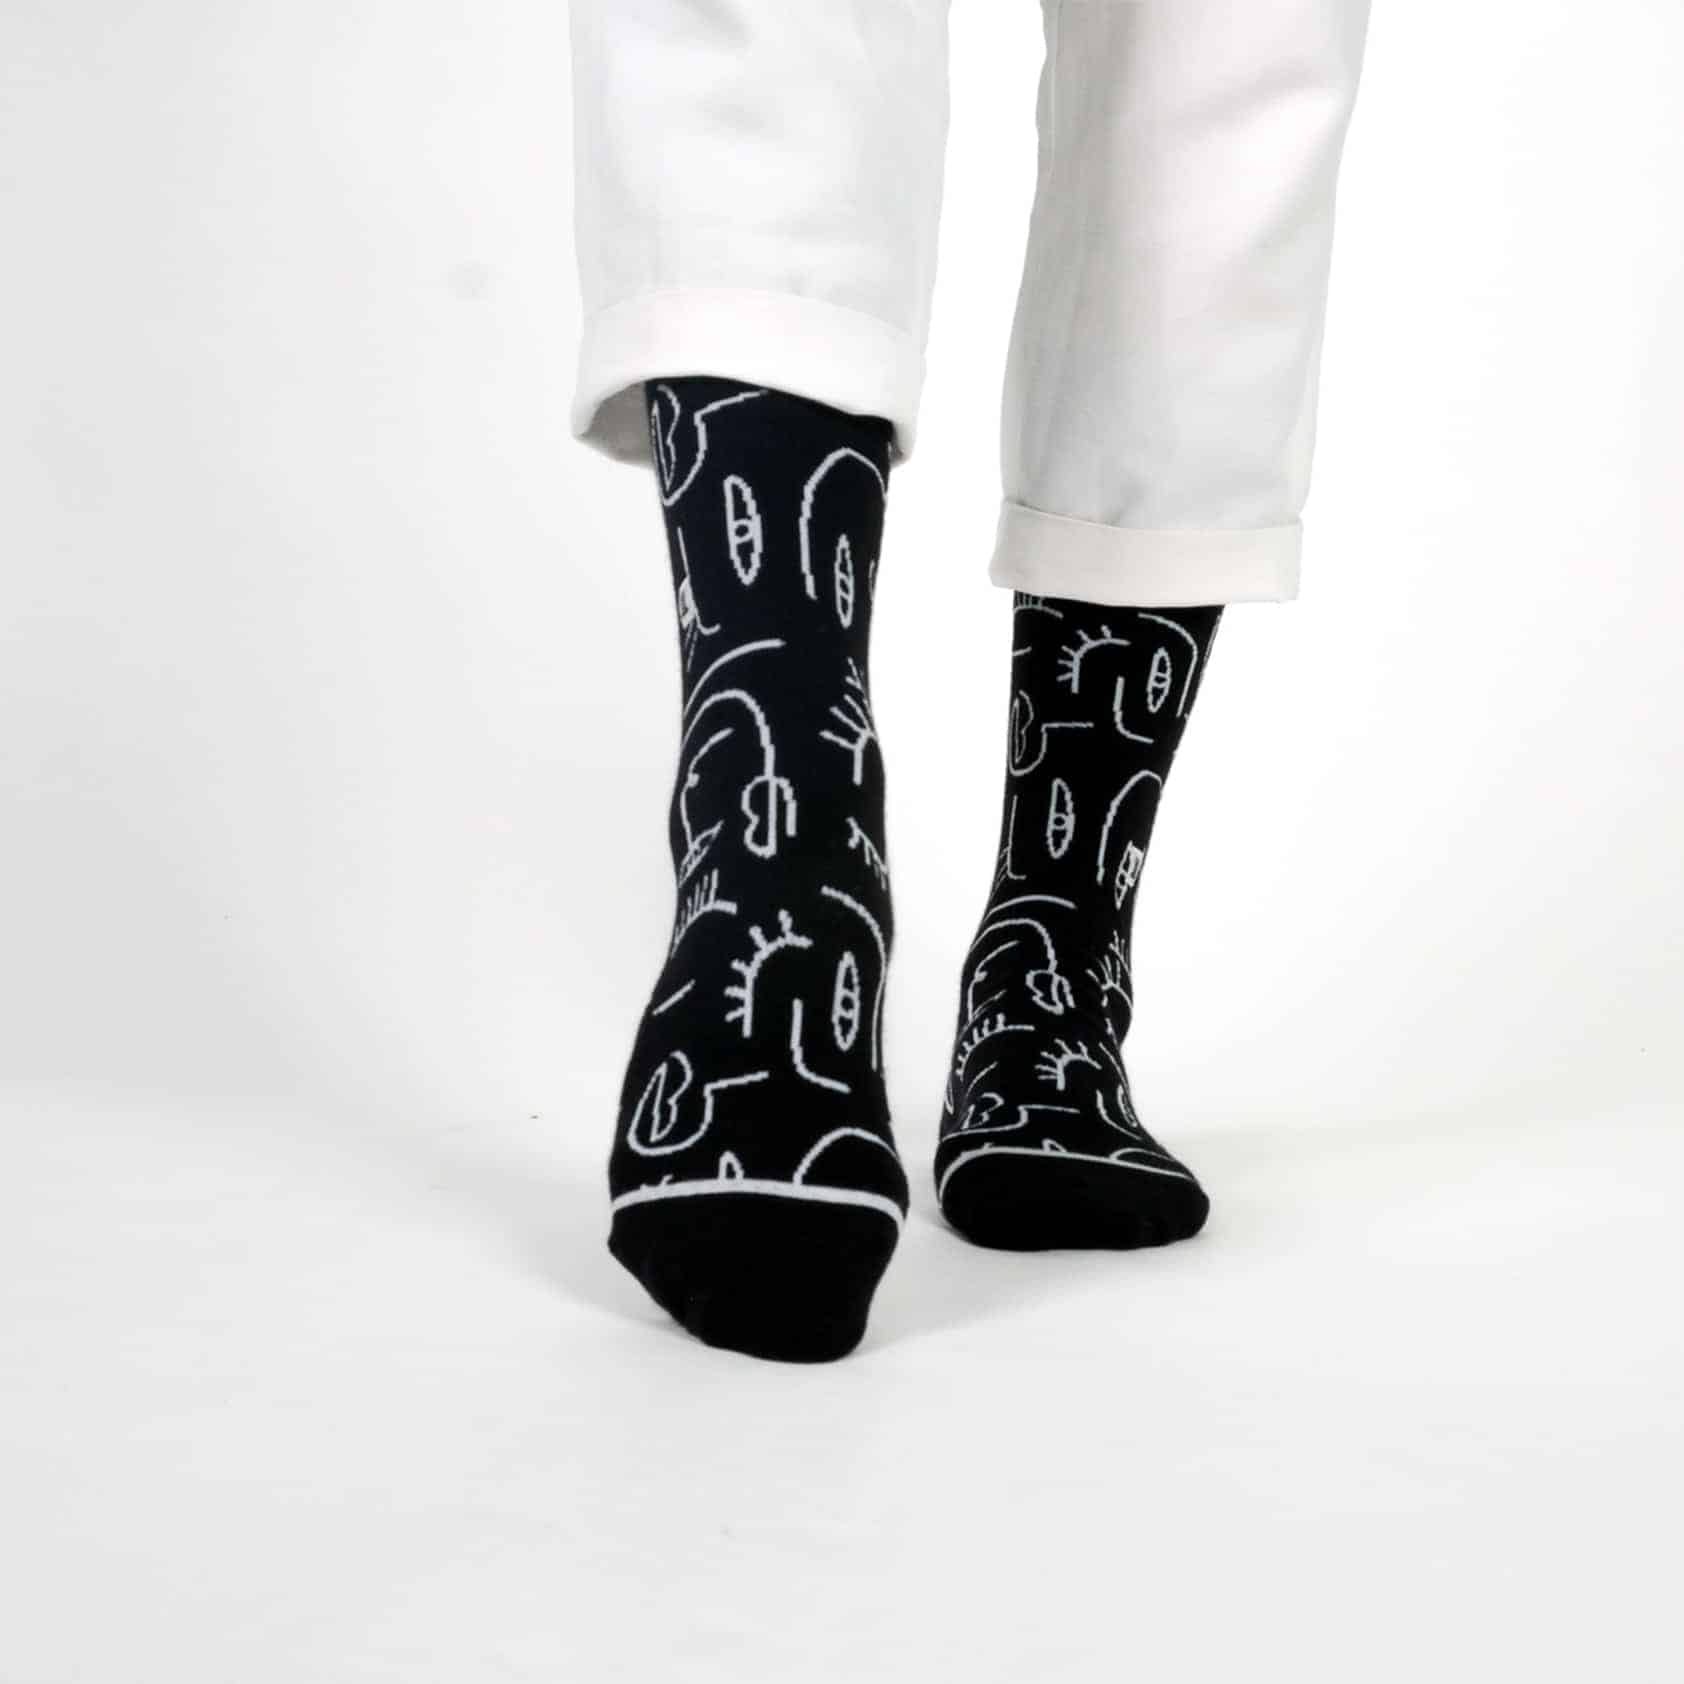 Collectoe Socks | Swagger by Koketit | Socks by Artists